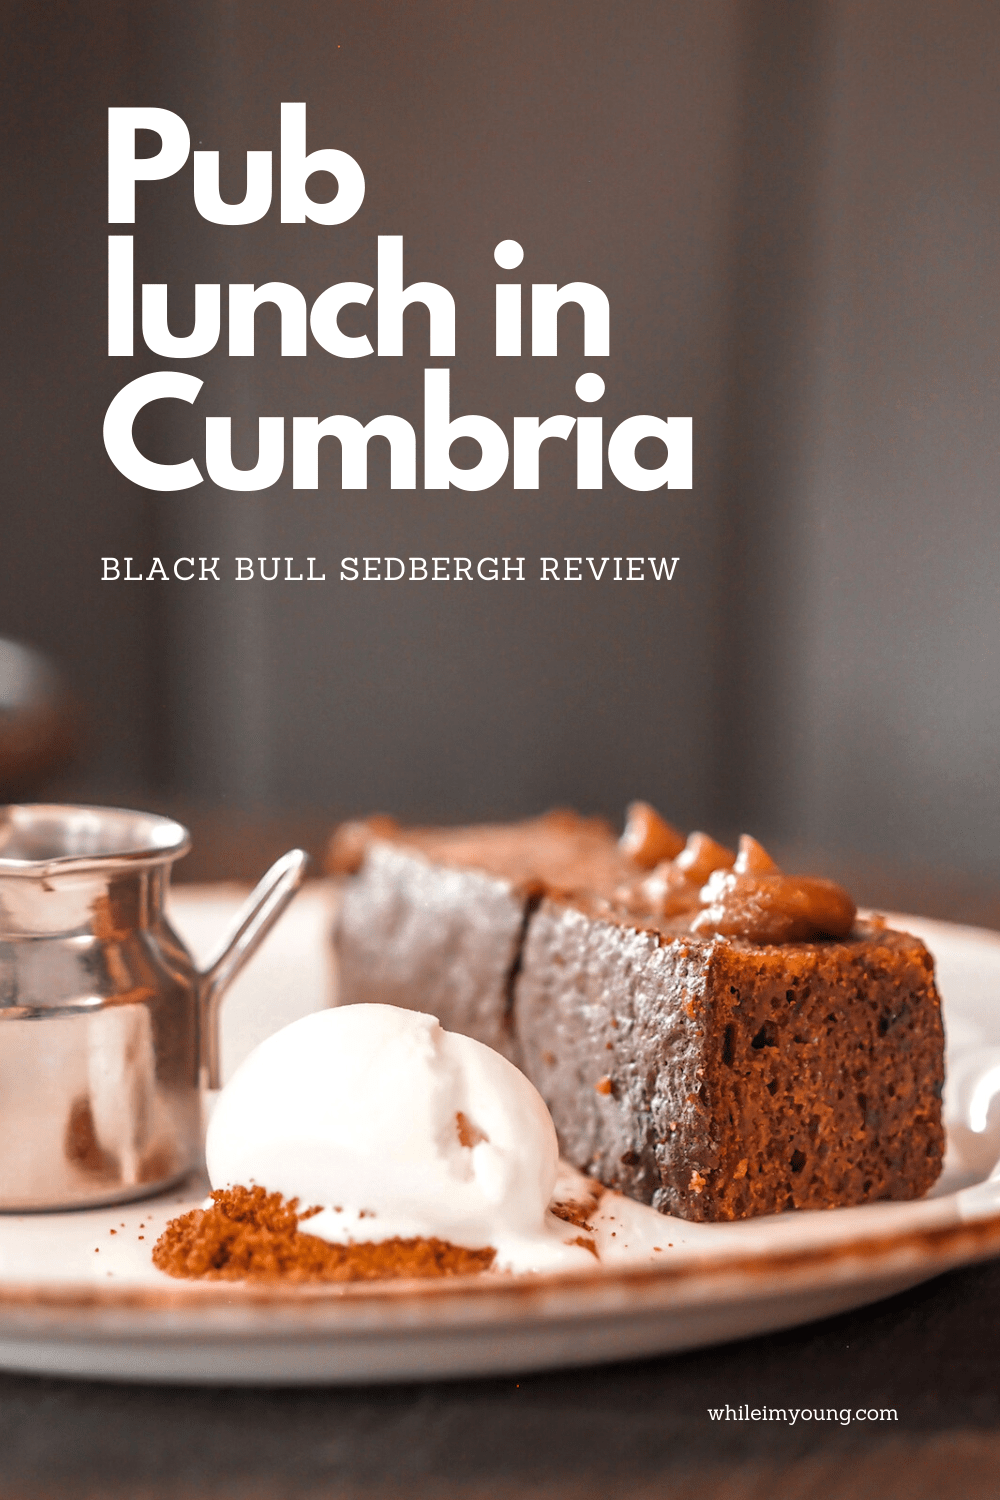 Pub lunch in Cumbria